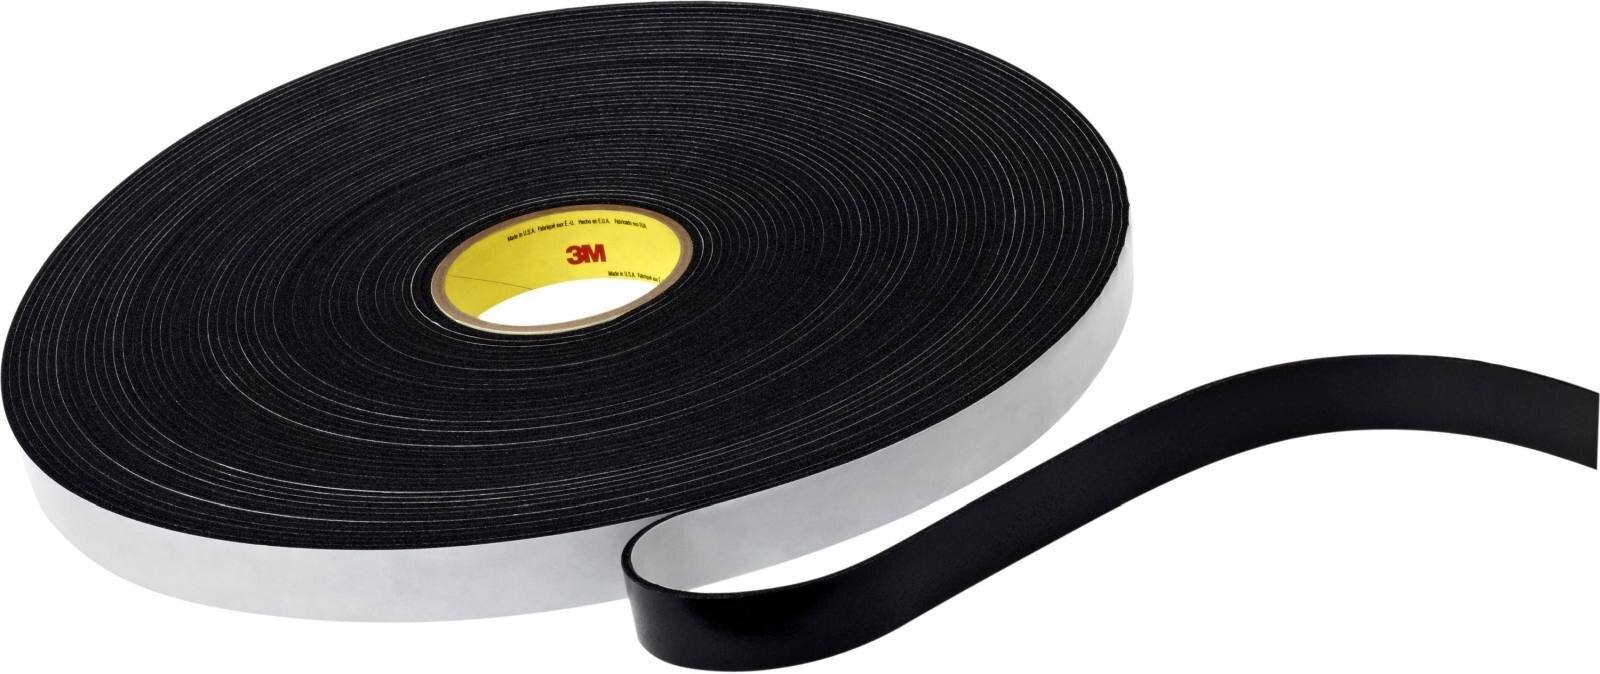 3M Single-sided vinyl foam adhesive tape 4508, black, 12 mm x 33 m, 3.2 mm